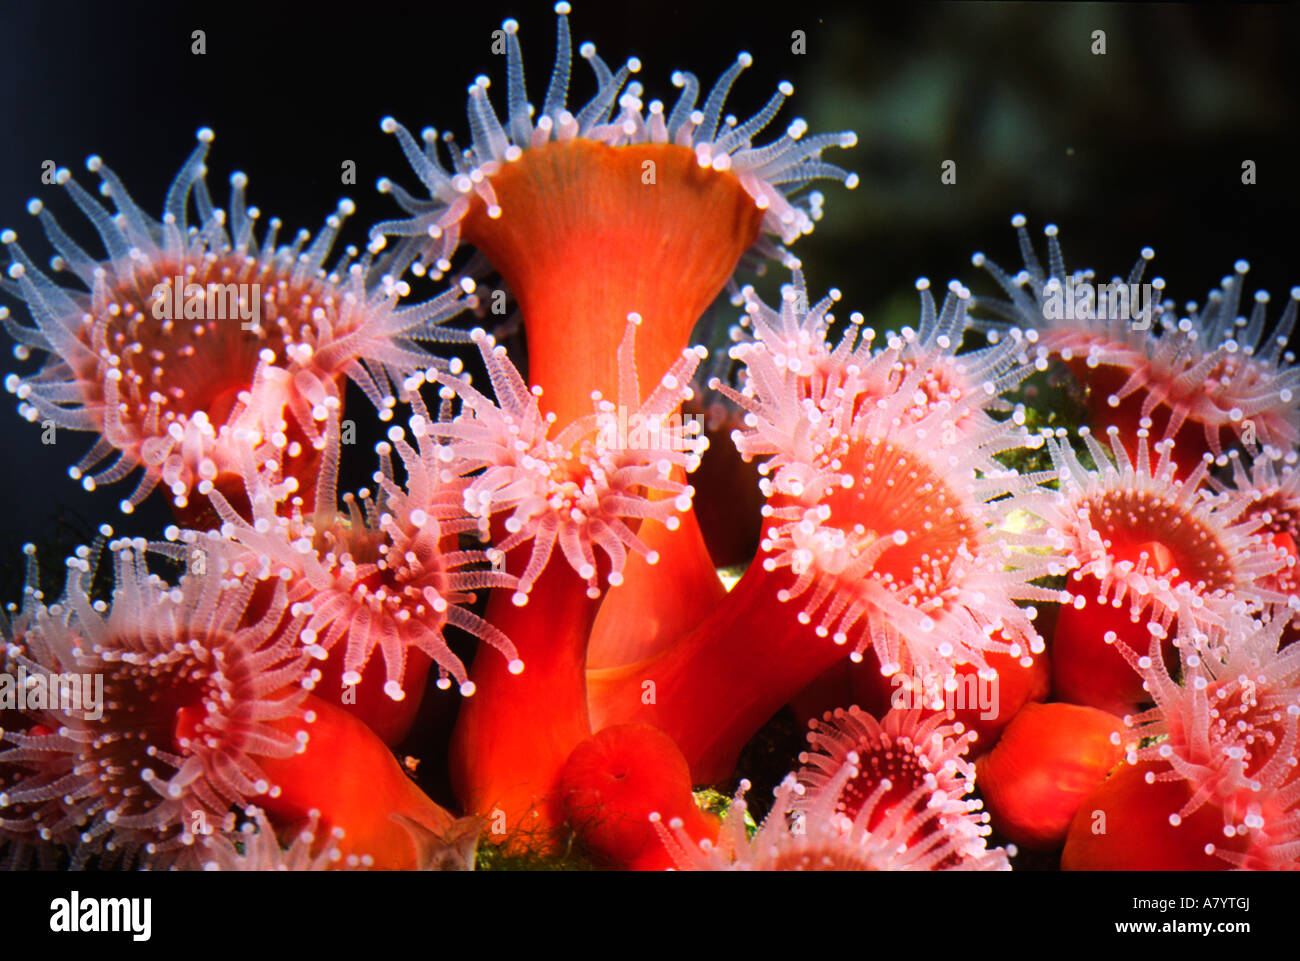 North America, USA, California. Strawberry anemone (Corynactis californica) cluster Stock Photo